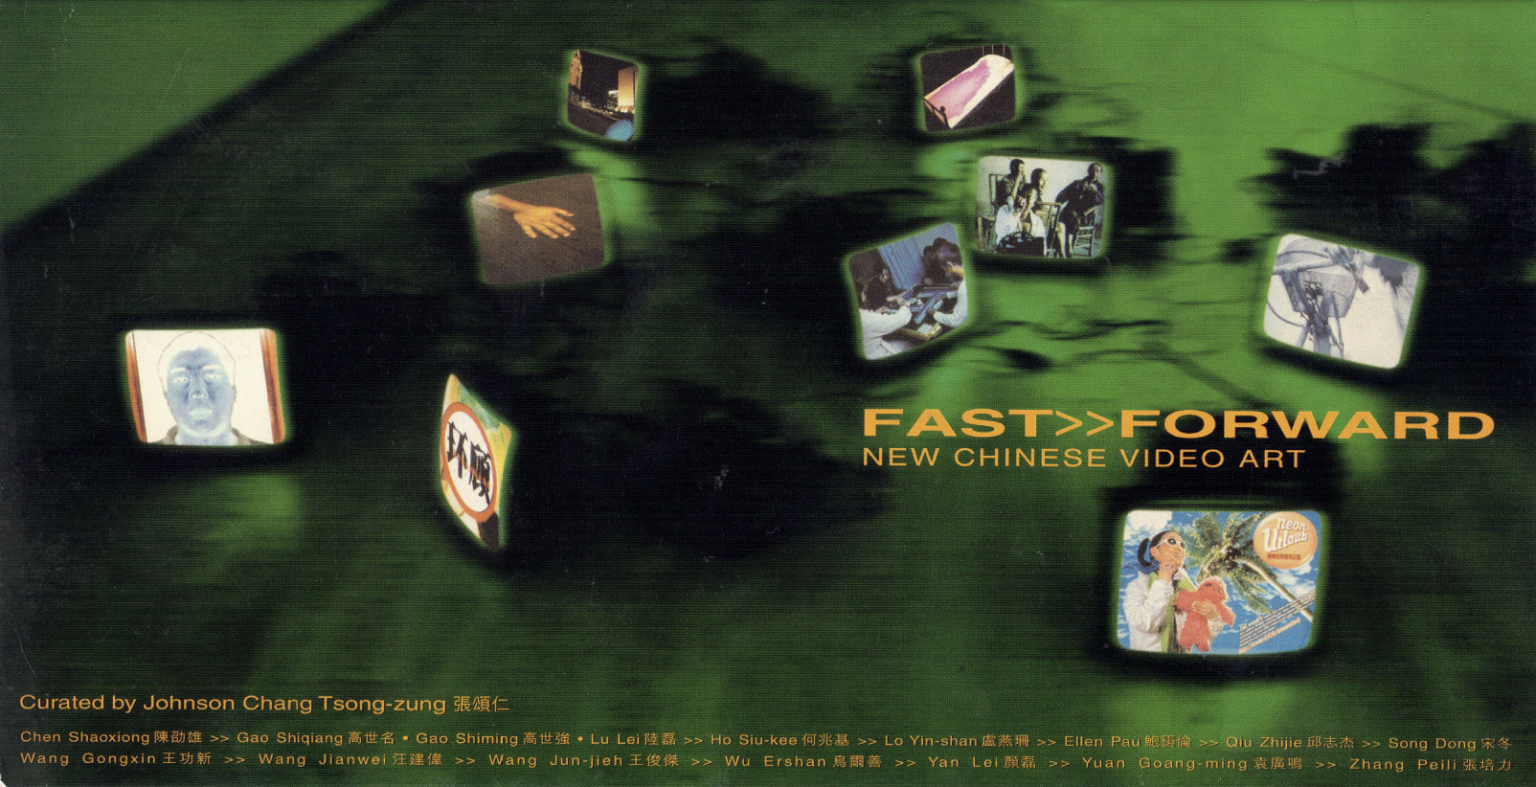 Fast>>Forward New Chinese Video Art 快鏡：中港台新錄像藝術